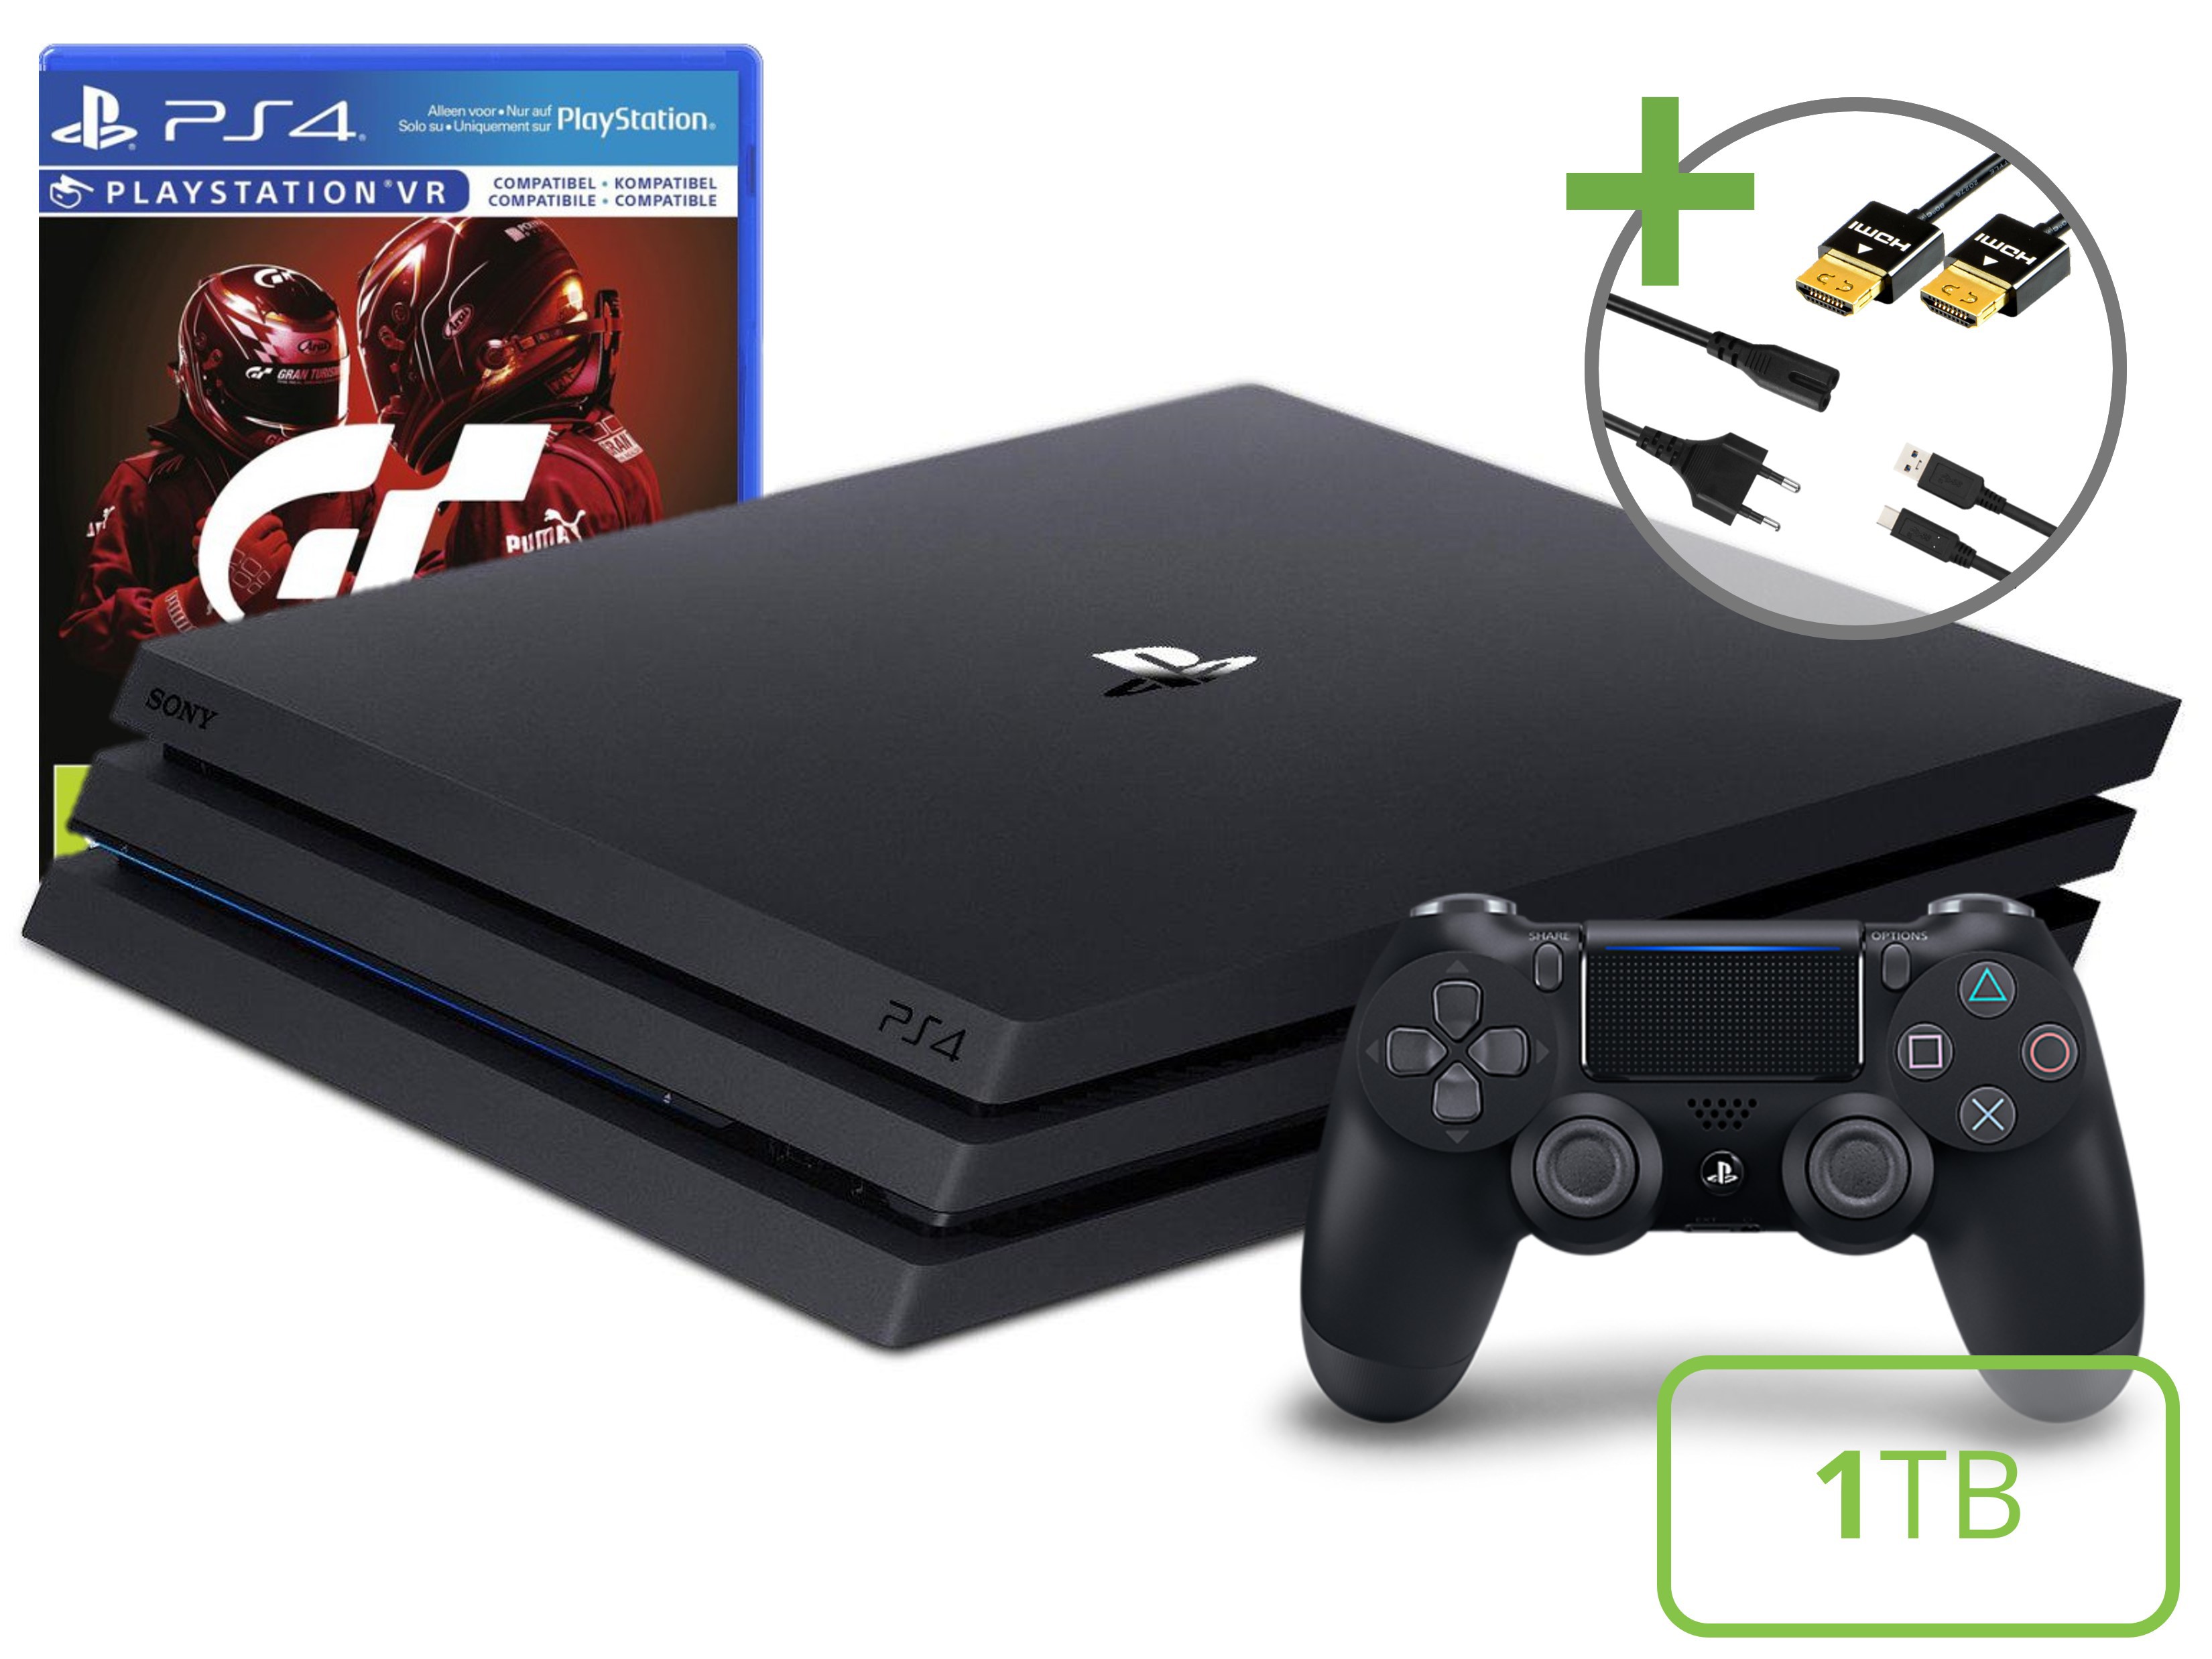 Sony PlayStation 4 Pro Starter Pack - 1TB Gran Turismo Sport Edition Kopen | Playstation 4 Hardware